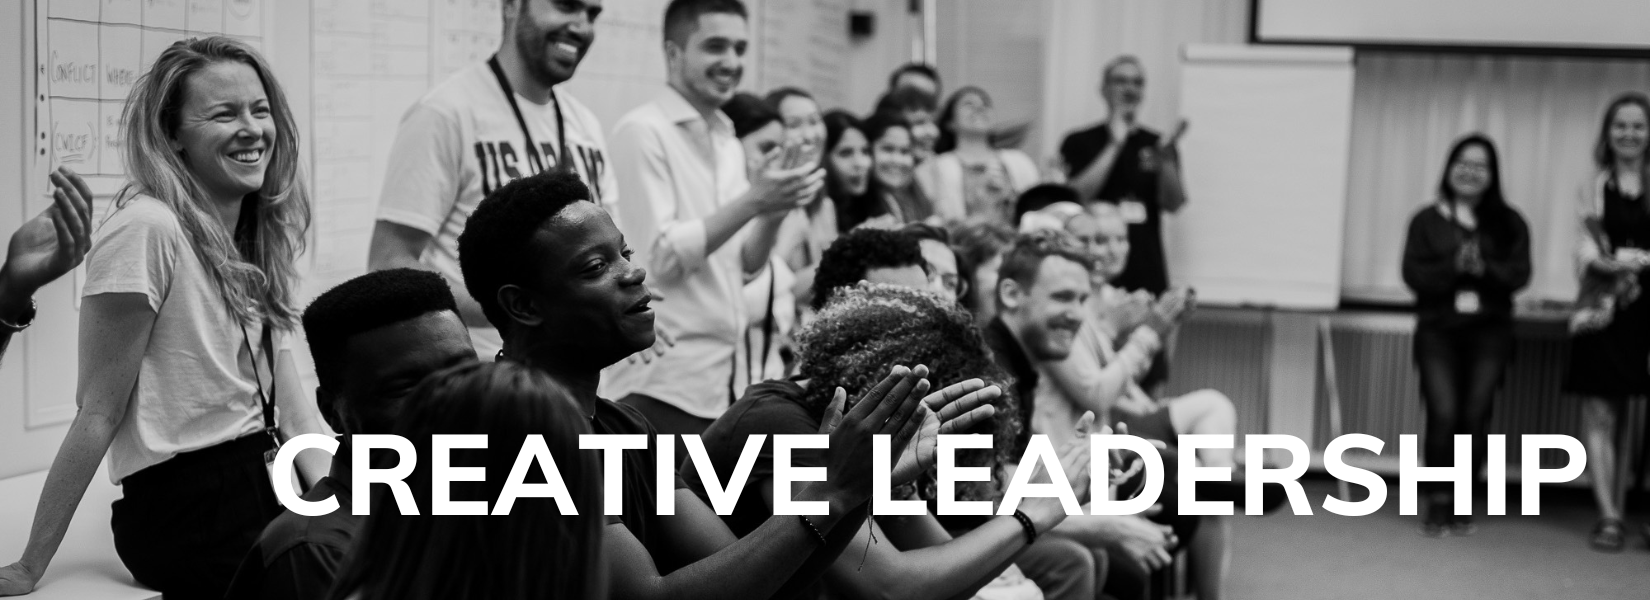 Creative Leadership banner landing page EN